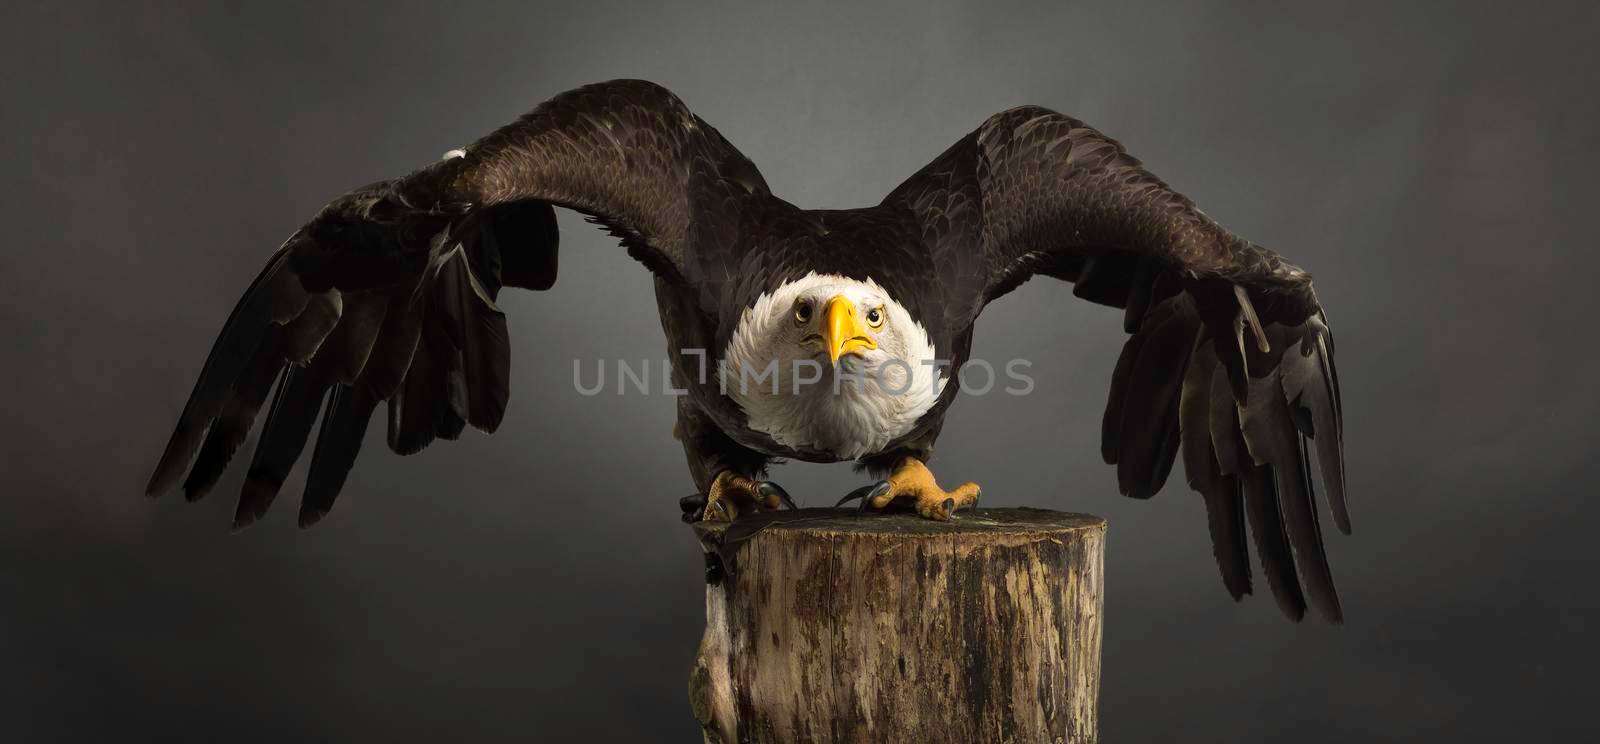 Studio portrait American Bald Eagle grey background wings spread by LeoniekvanderVliet